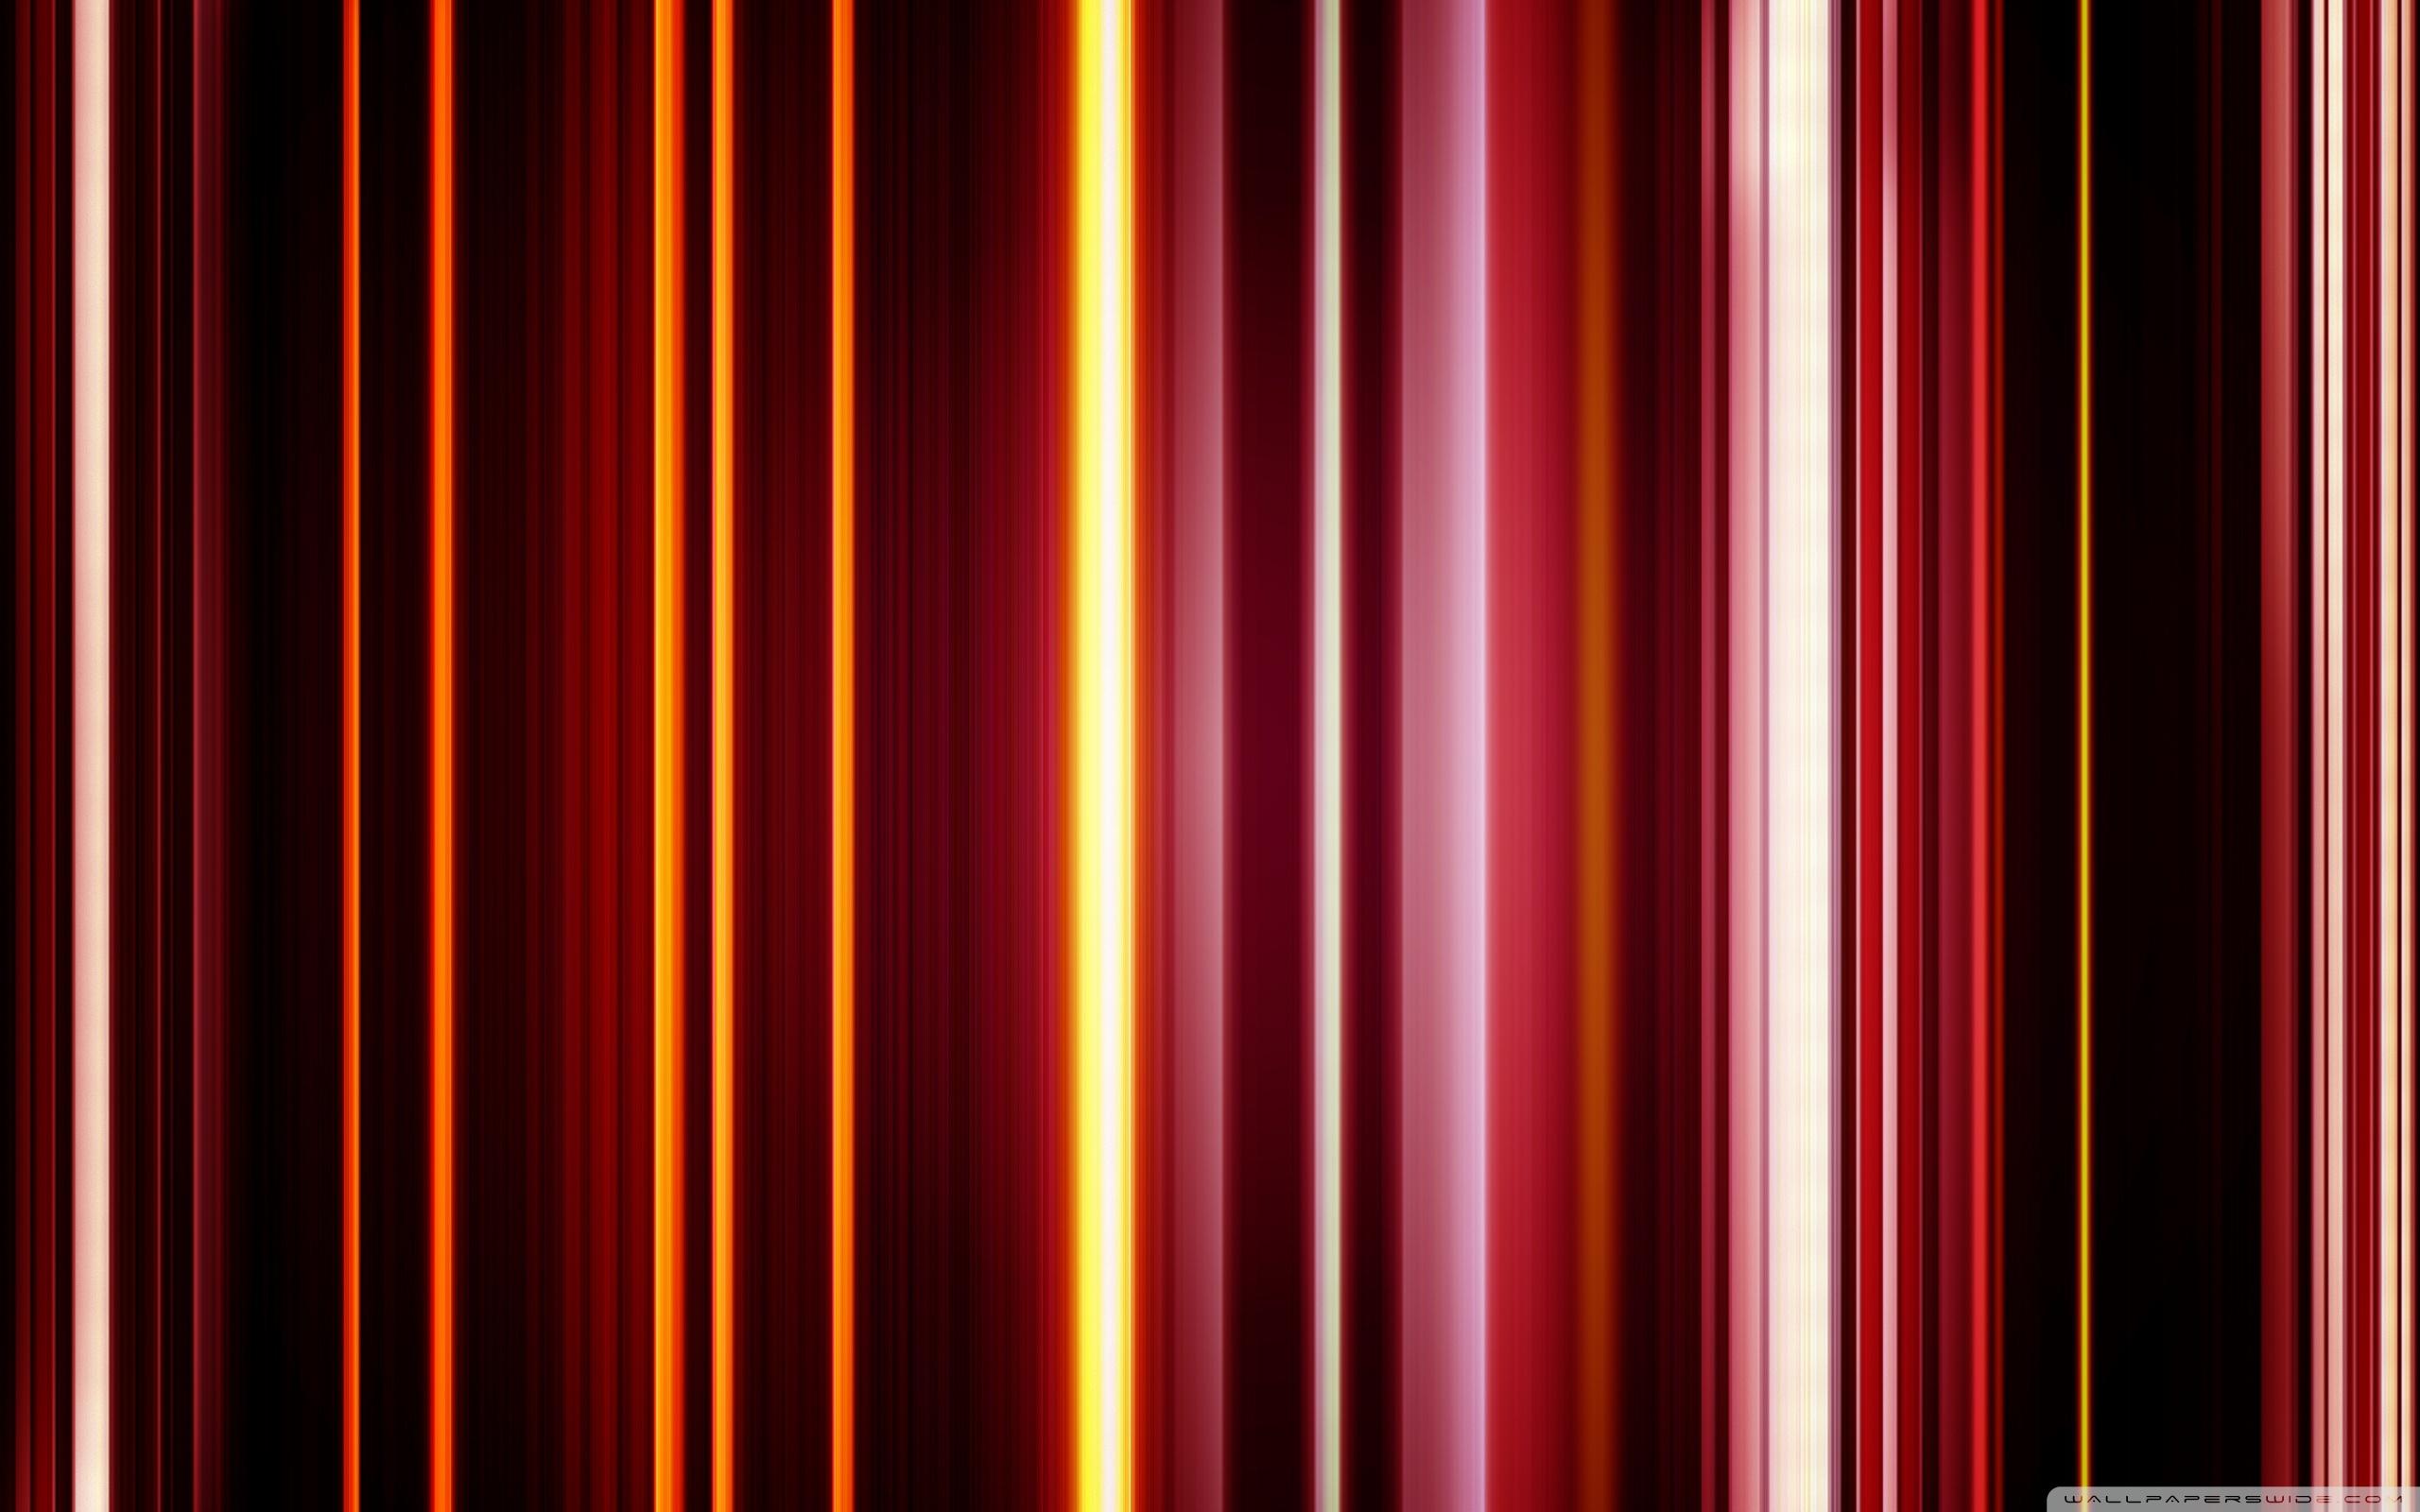 Red Light Lines Ultra HD Desktop Background Wallpaper for 4K UHD TV, Tablet